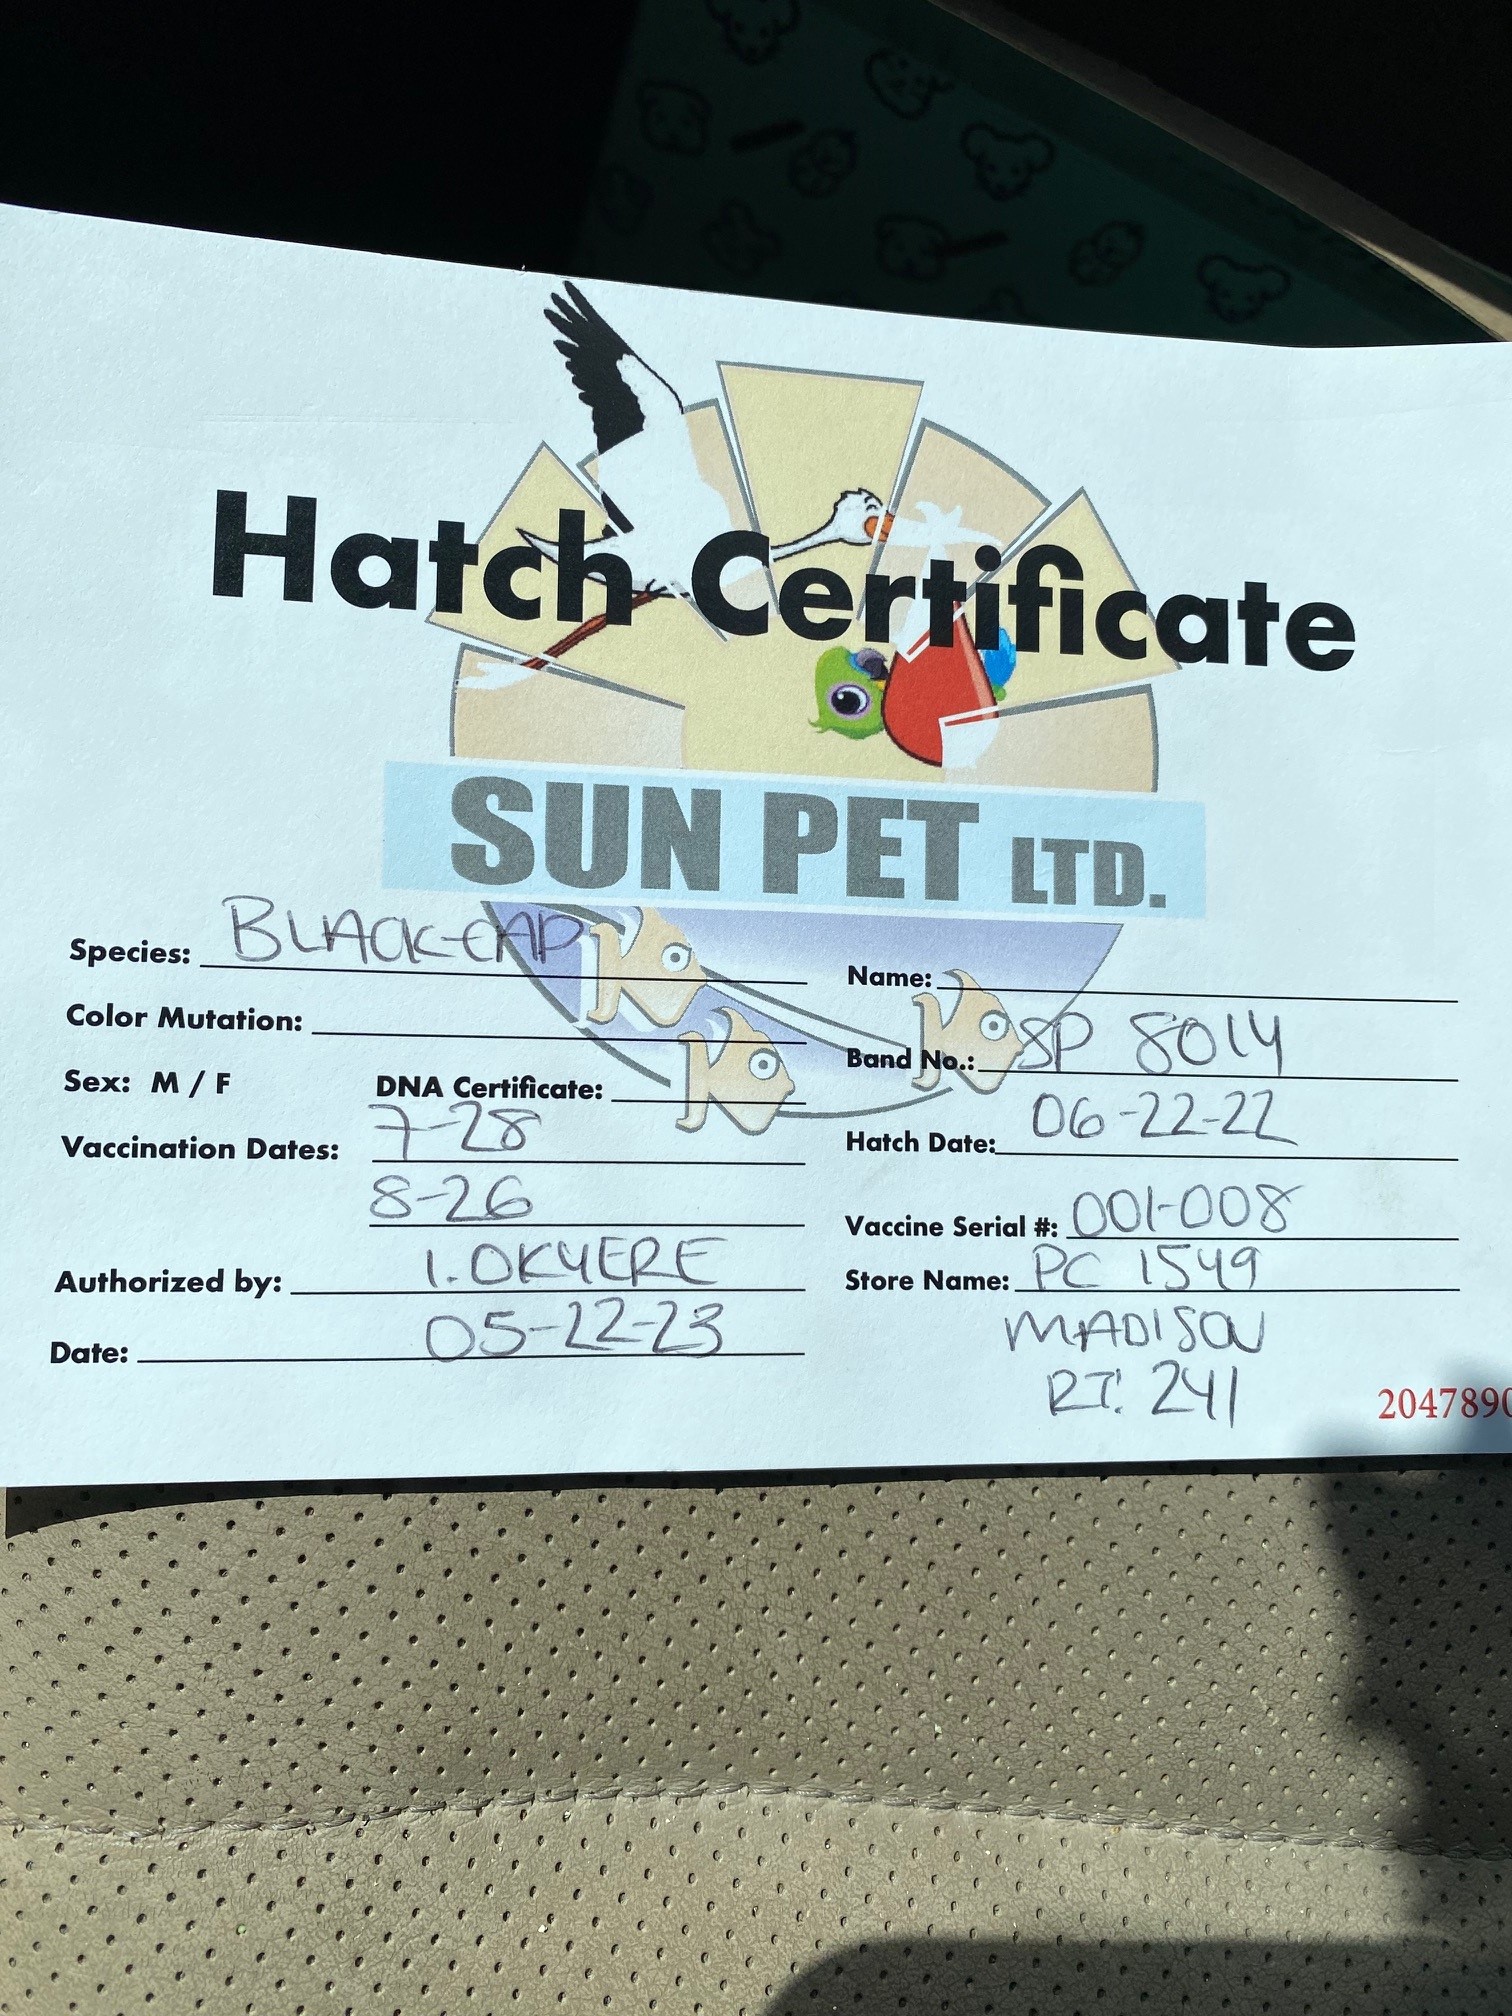 Little Buddy hatch certificate.